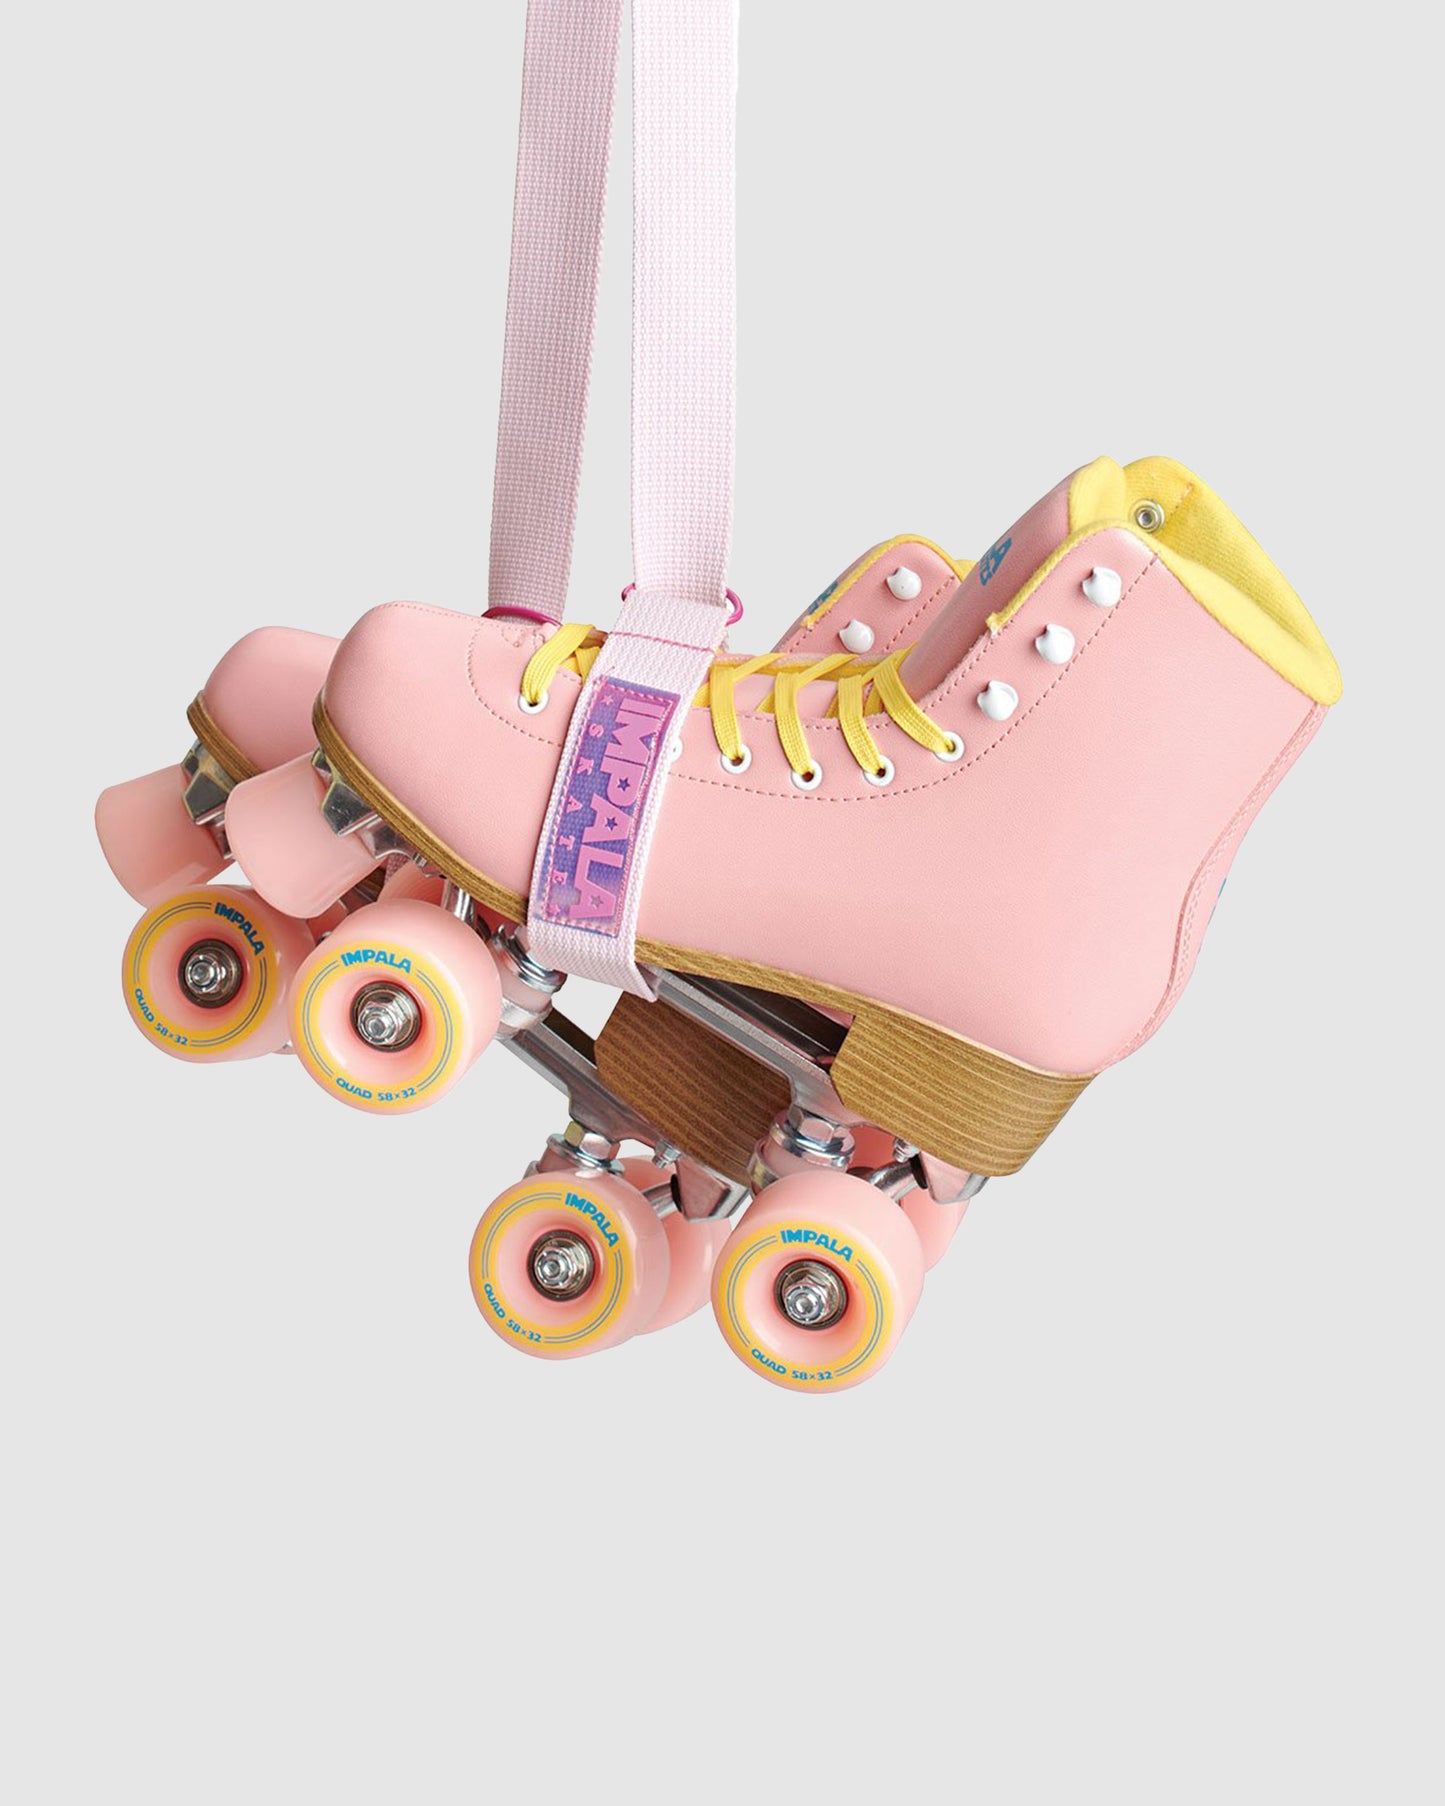 Impala Skate Strap - Pink